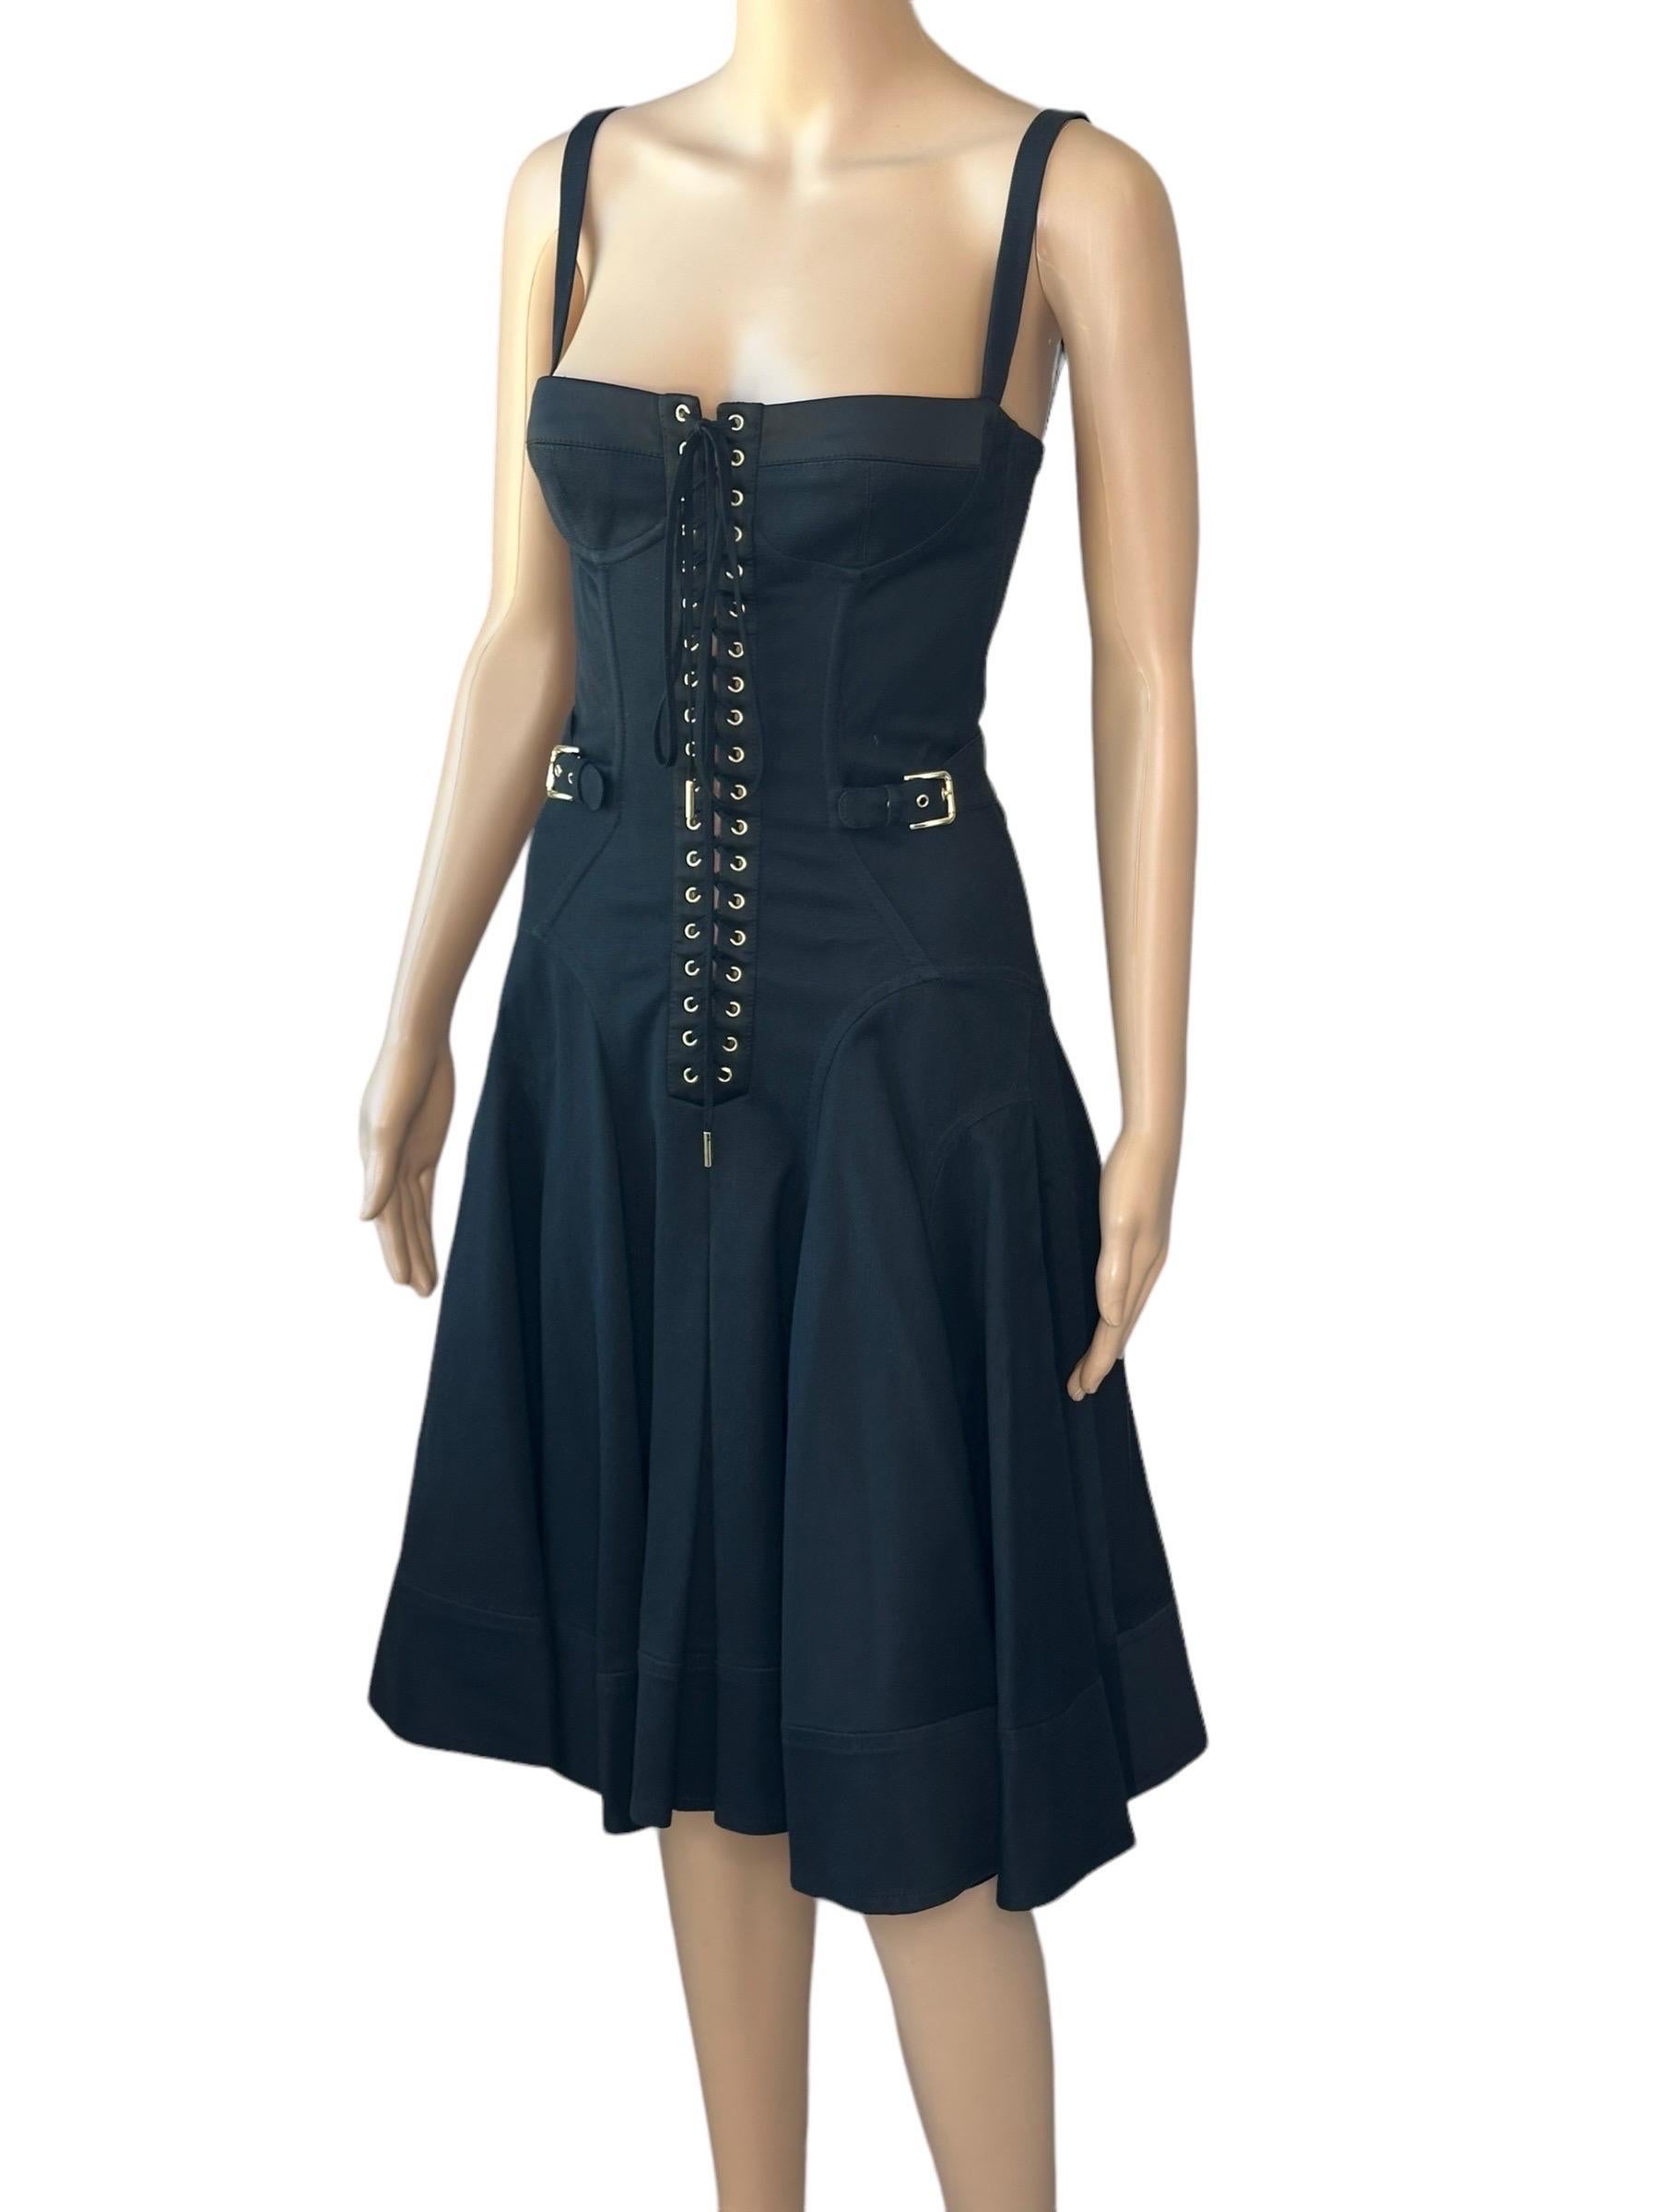 Dolce & Gabbana S/S 2007 Unworn Corset Lace-Up Bustier Black Dress IT 40
